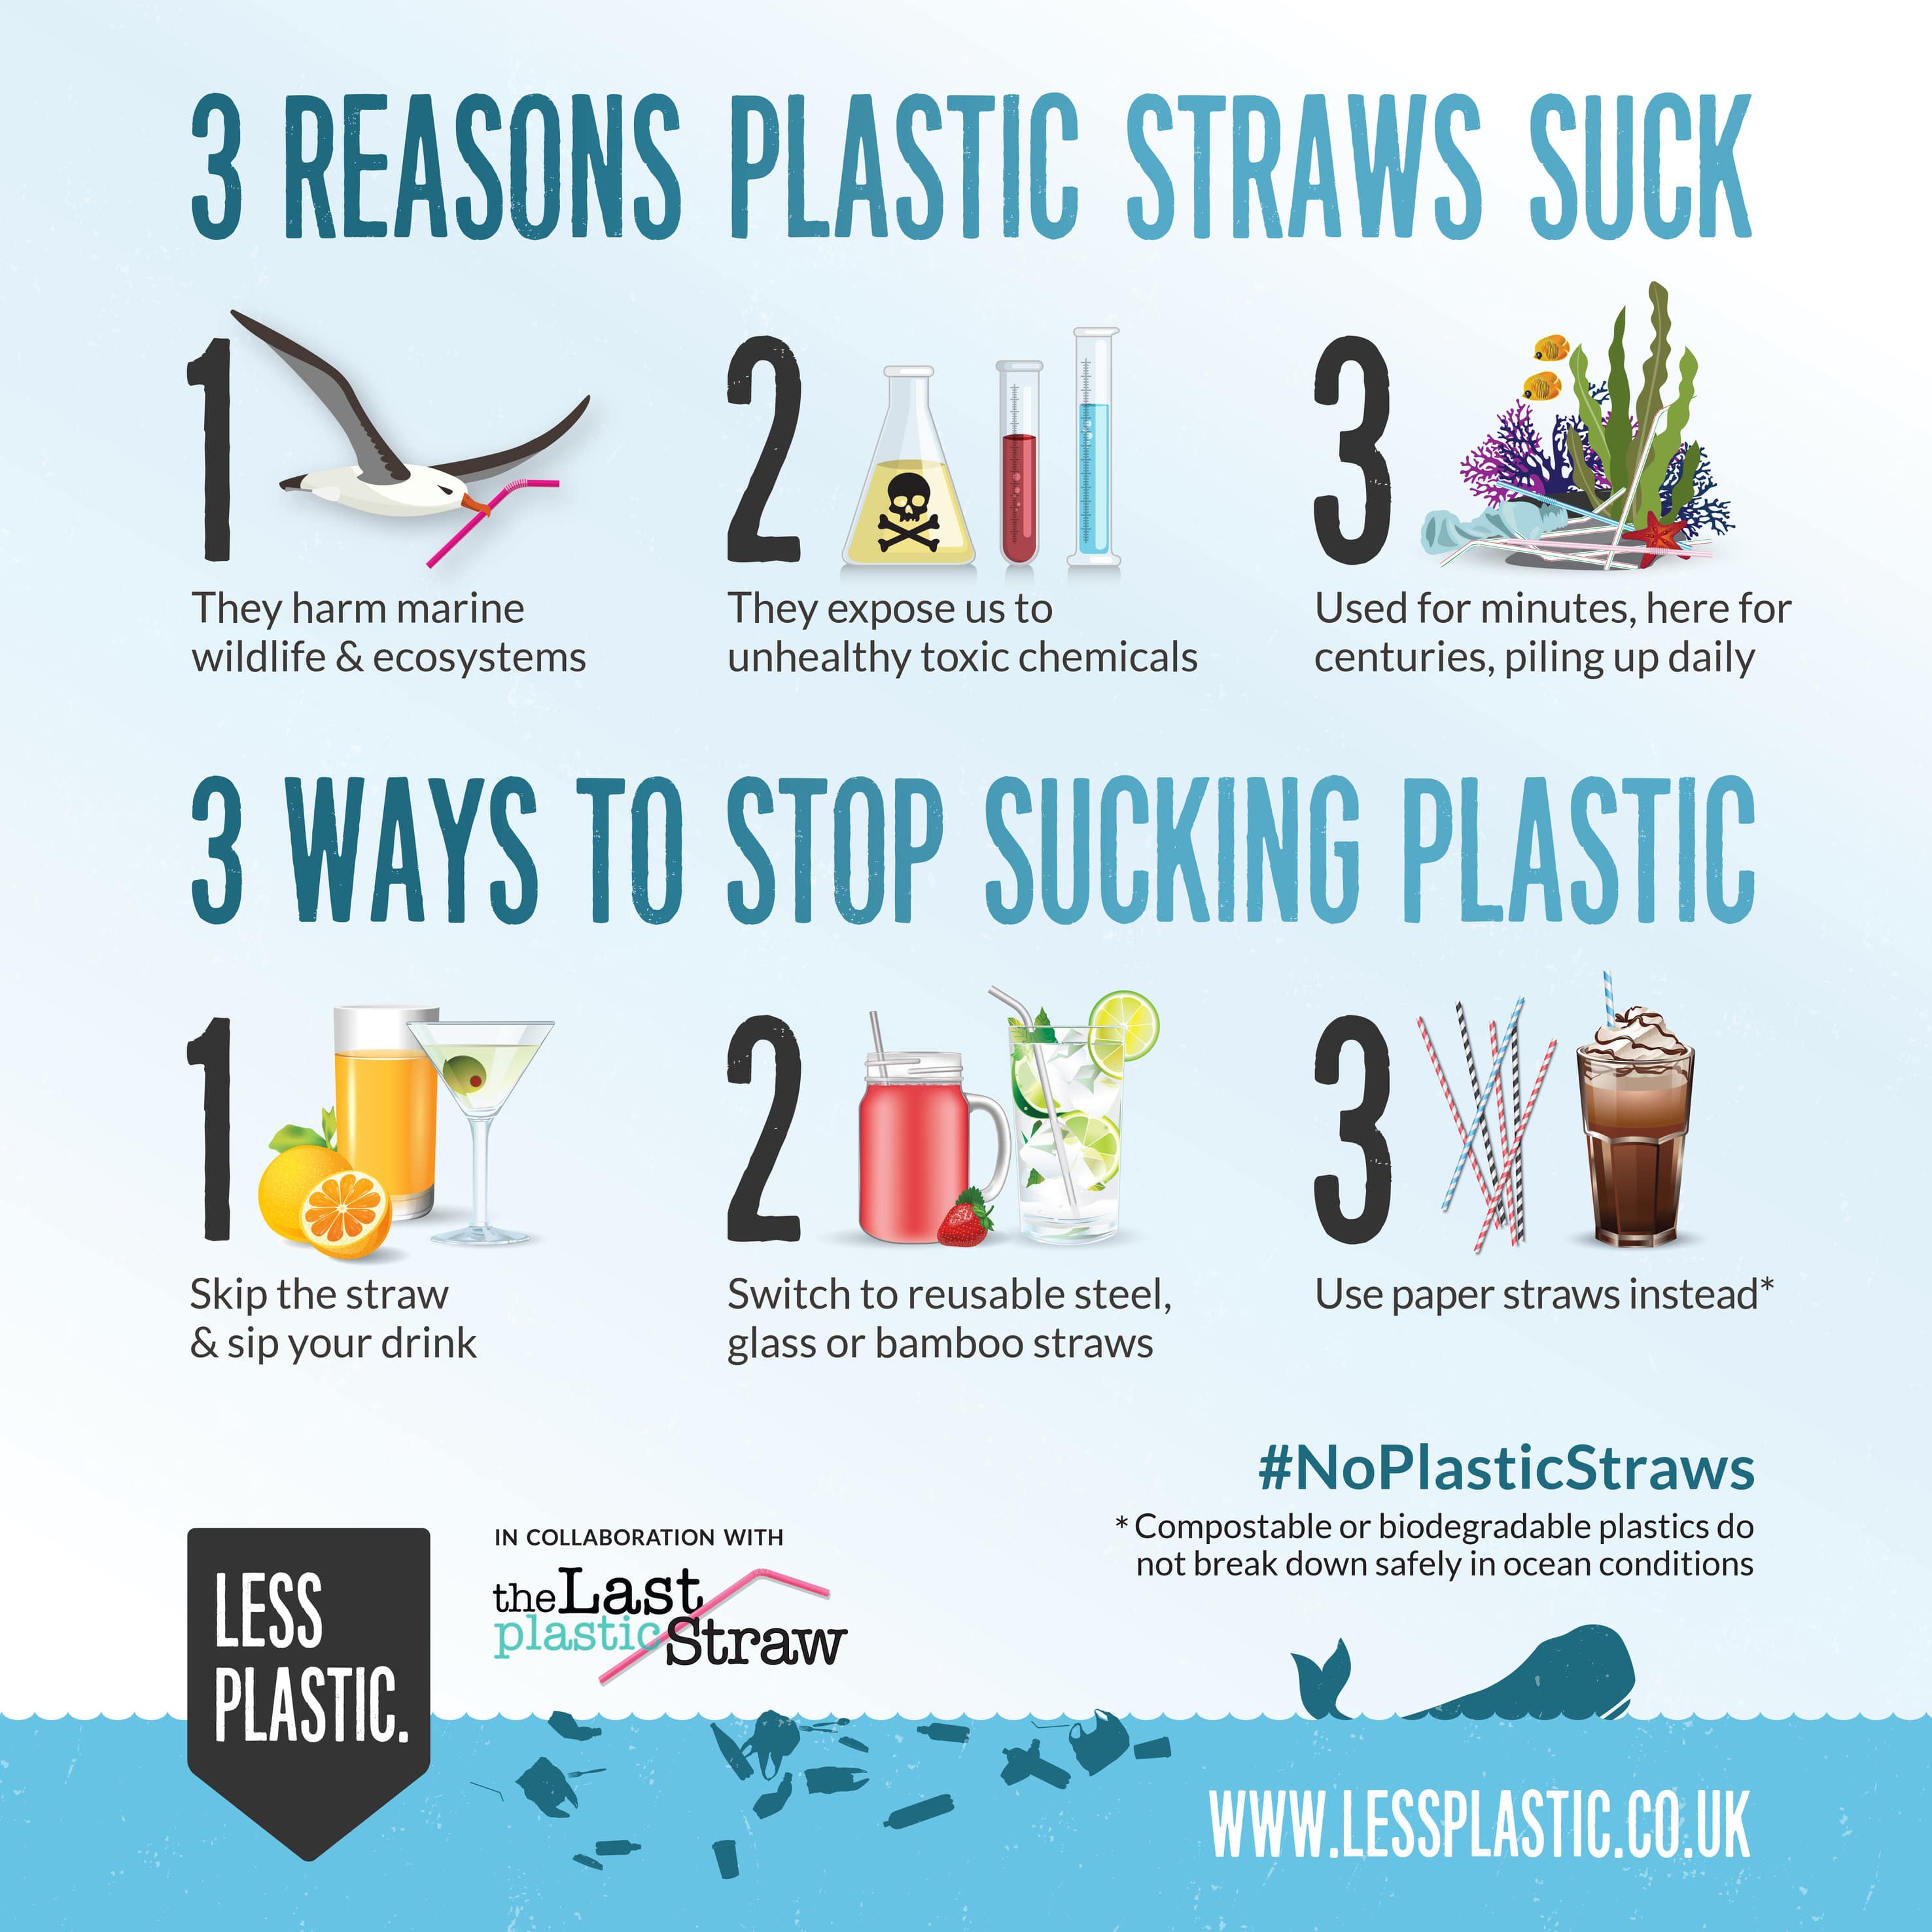 3 reasons plastic straws suck infographic